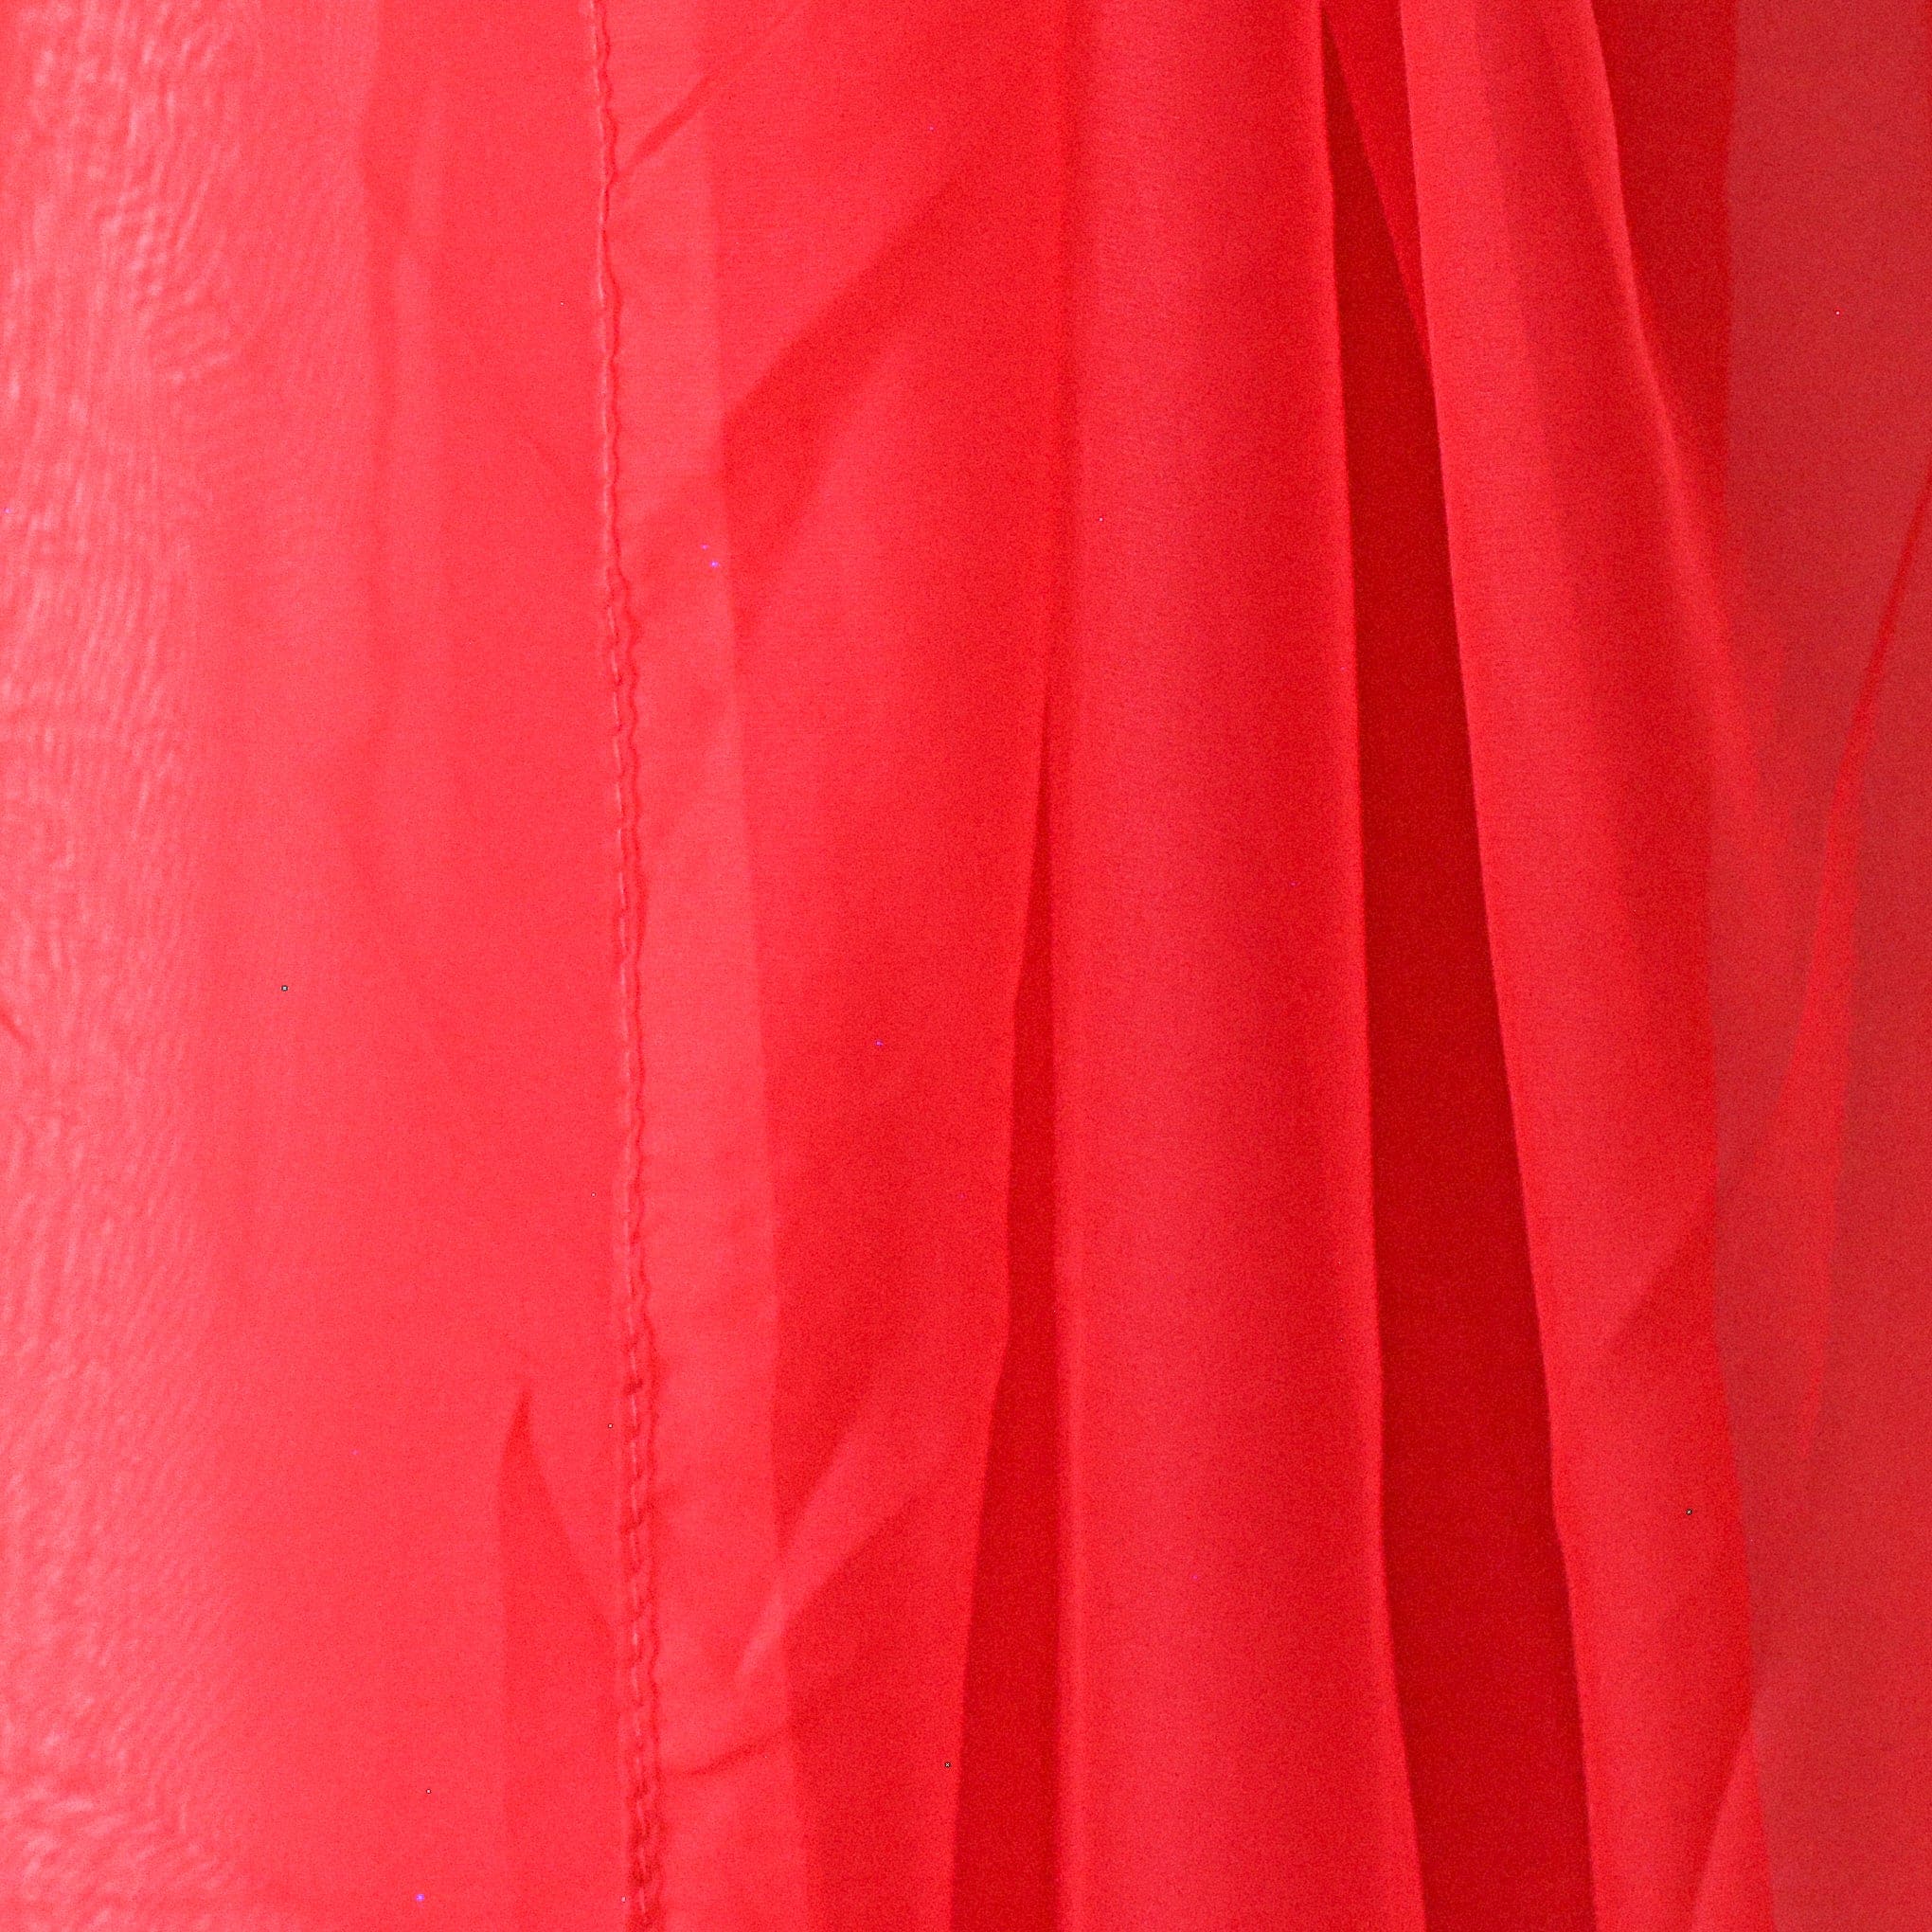 Arenberg tørklæde - Rød - Tørklæde